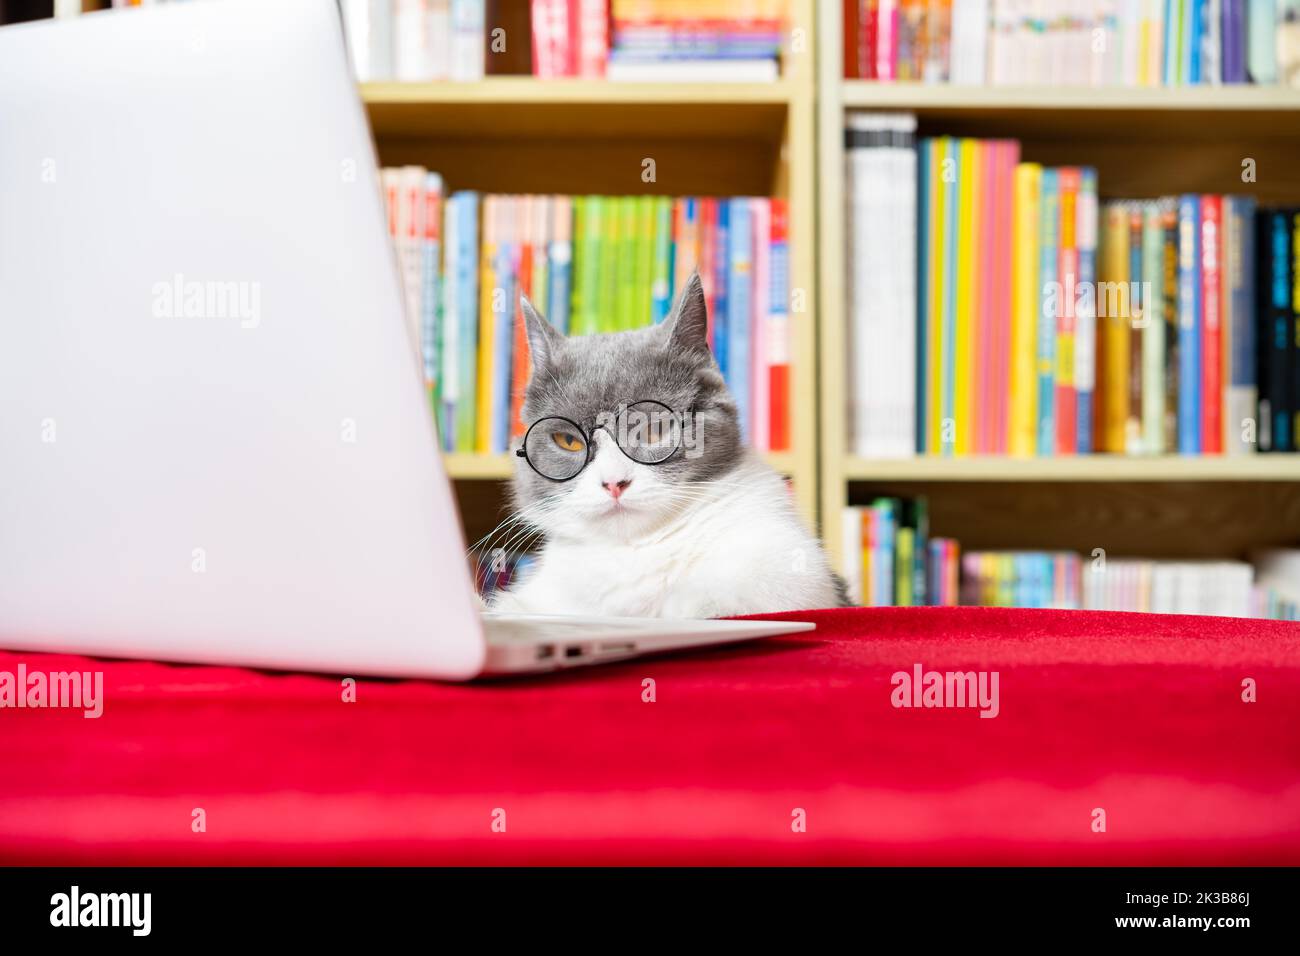 cute british shorthair cat using laptop with books shelf on back Stock Photo